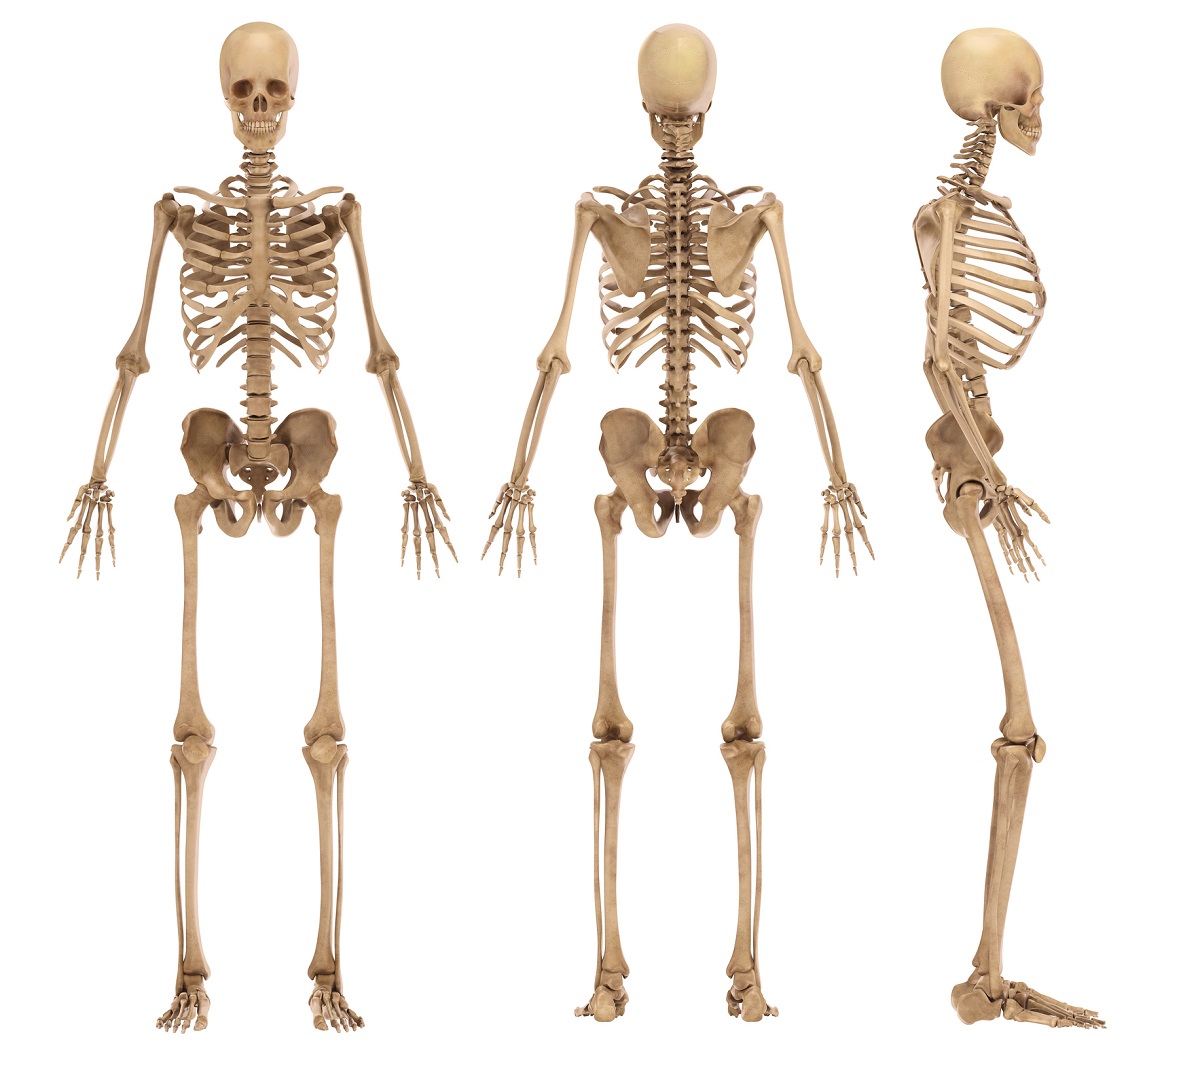 The skeleton of man